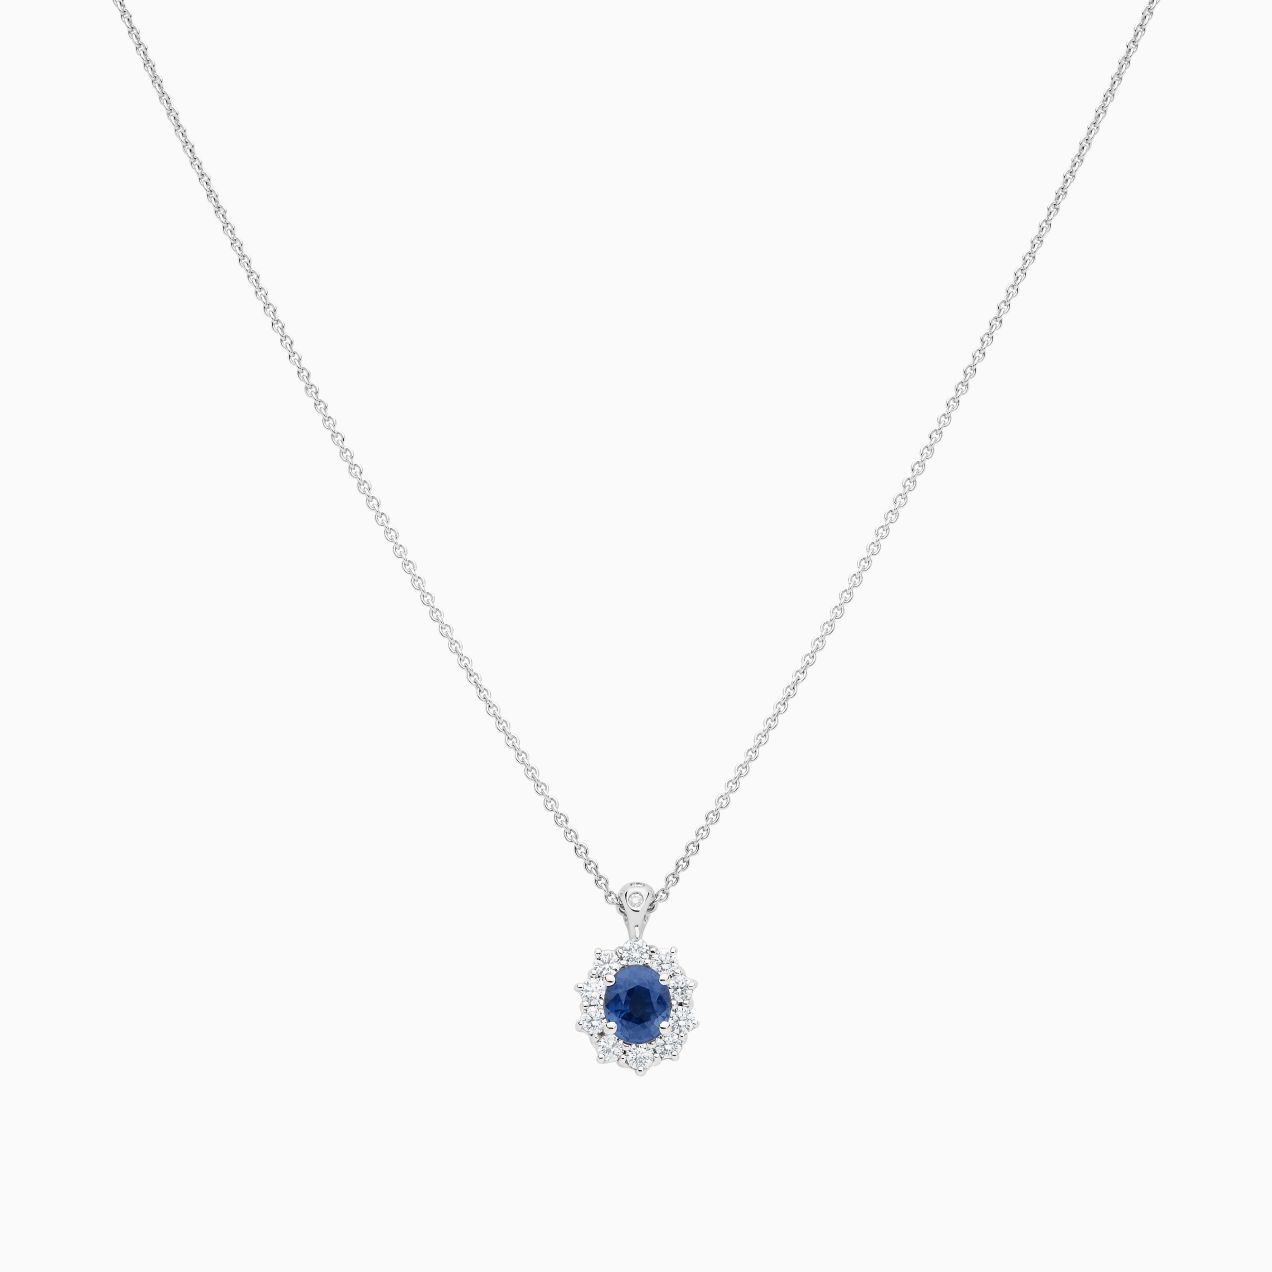 Sapphire pendant with diamonds